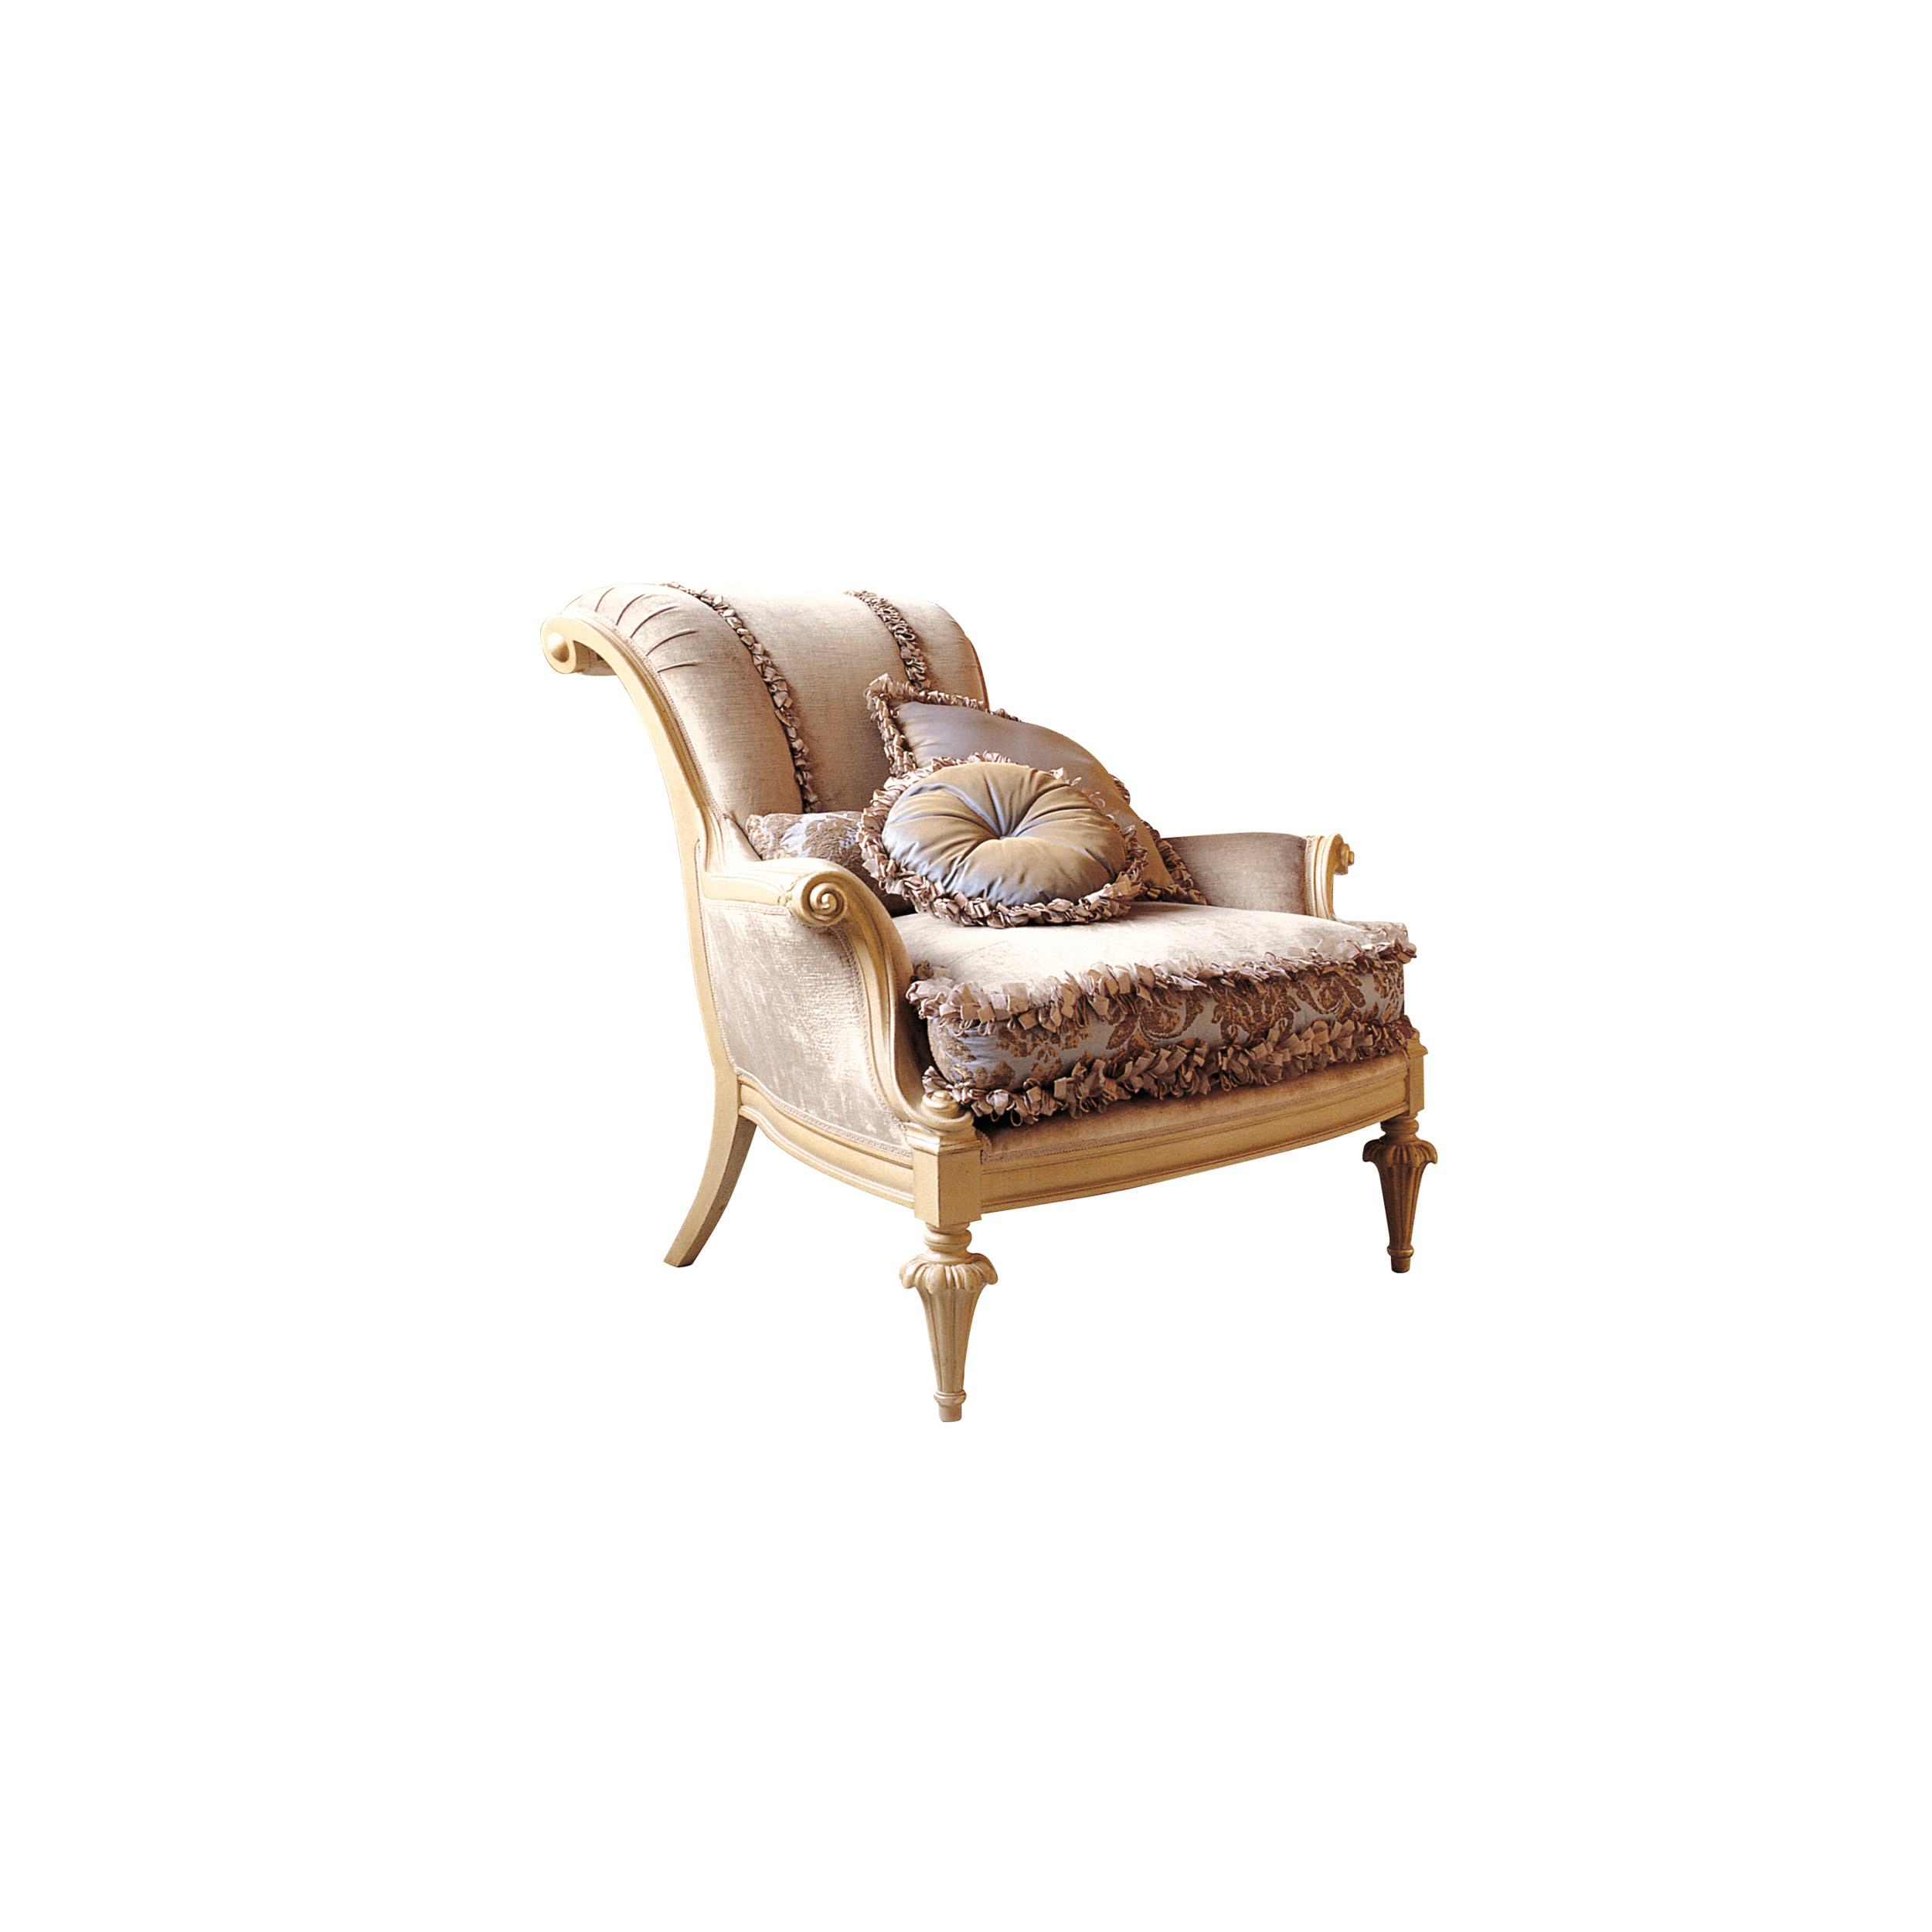 Фото 1 - Кресло Poltrona  в комплекте с подушками  